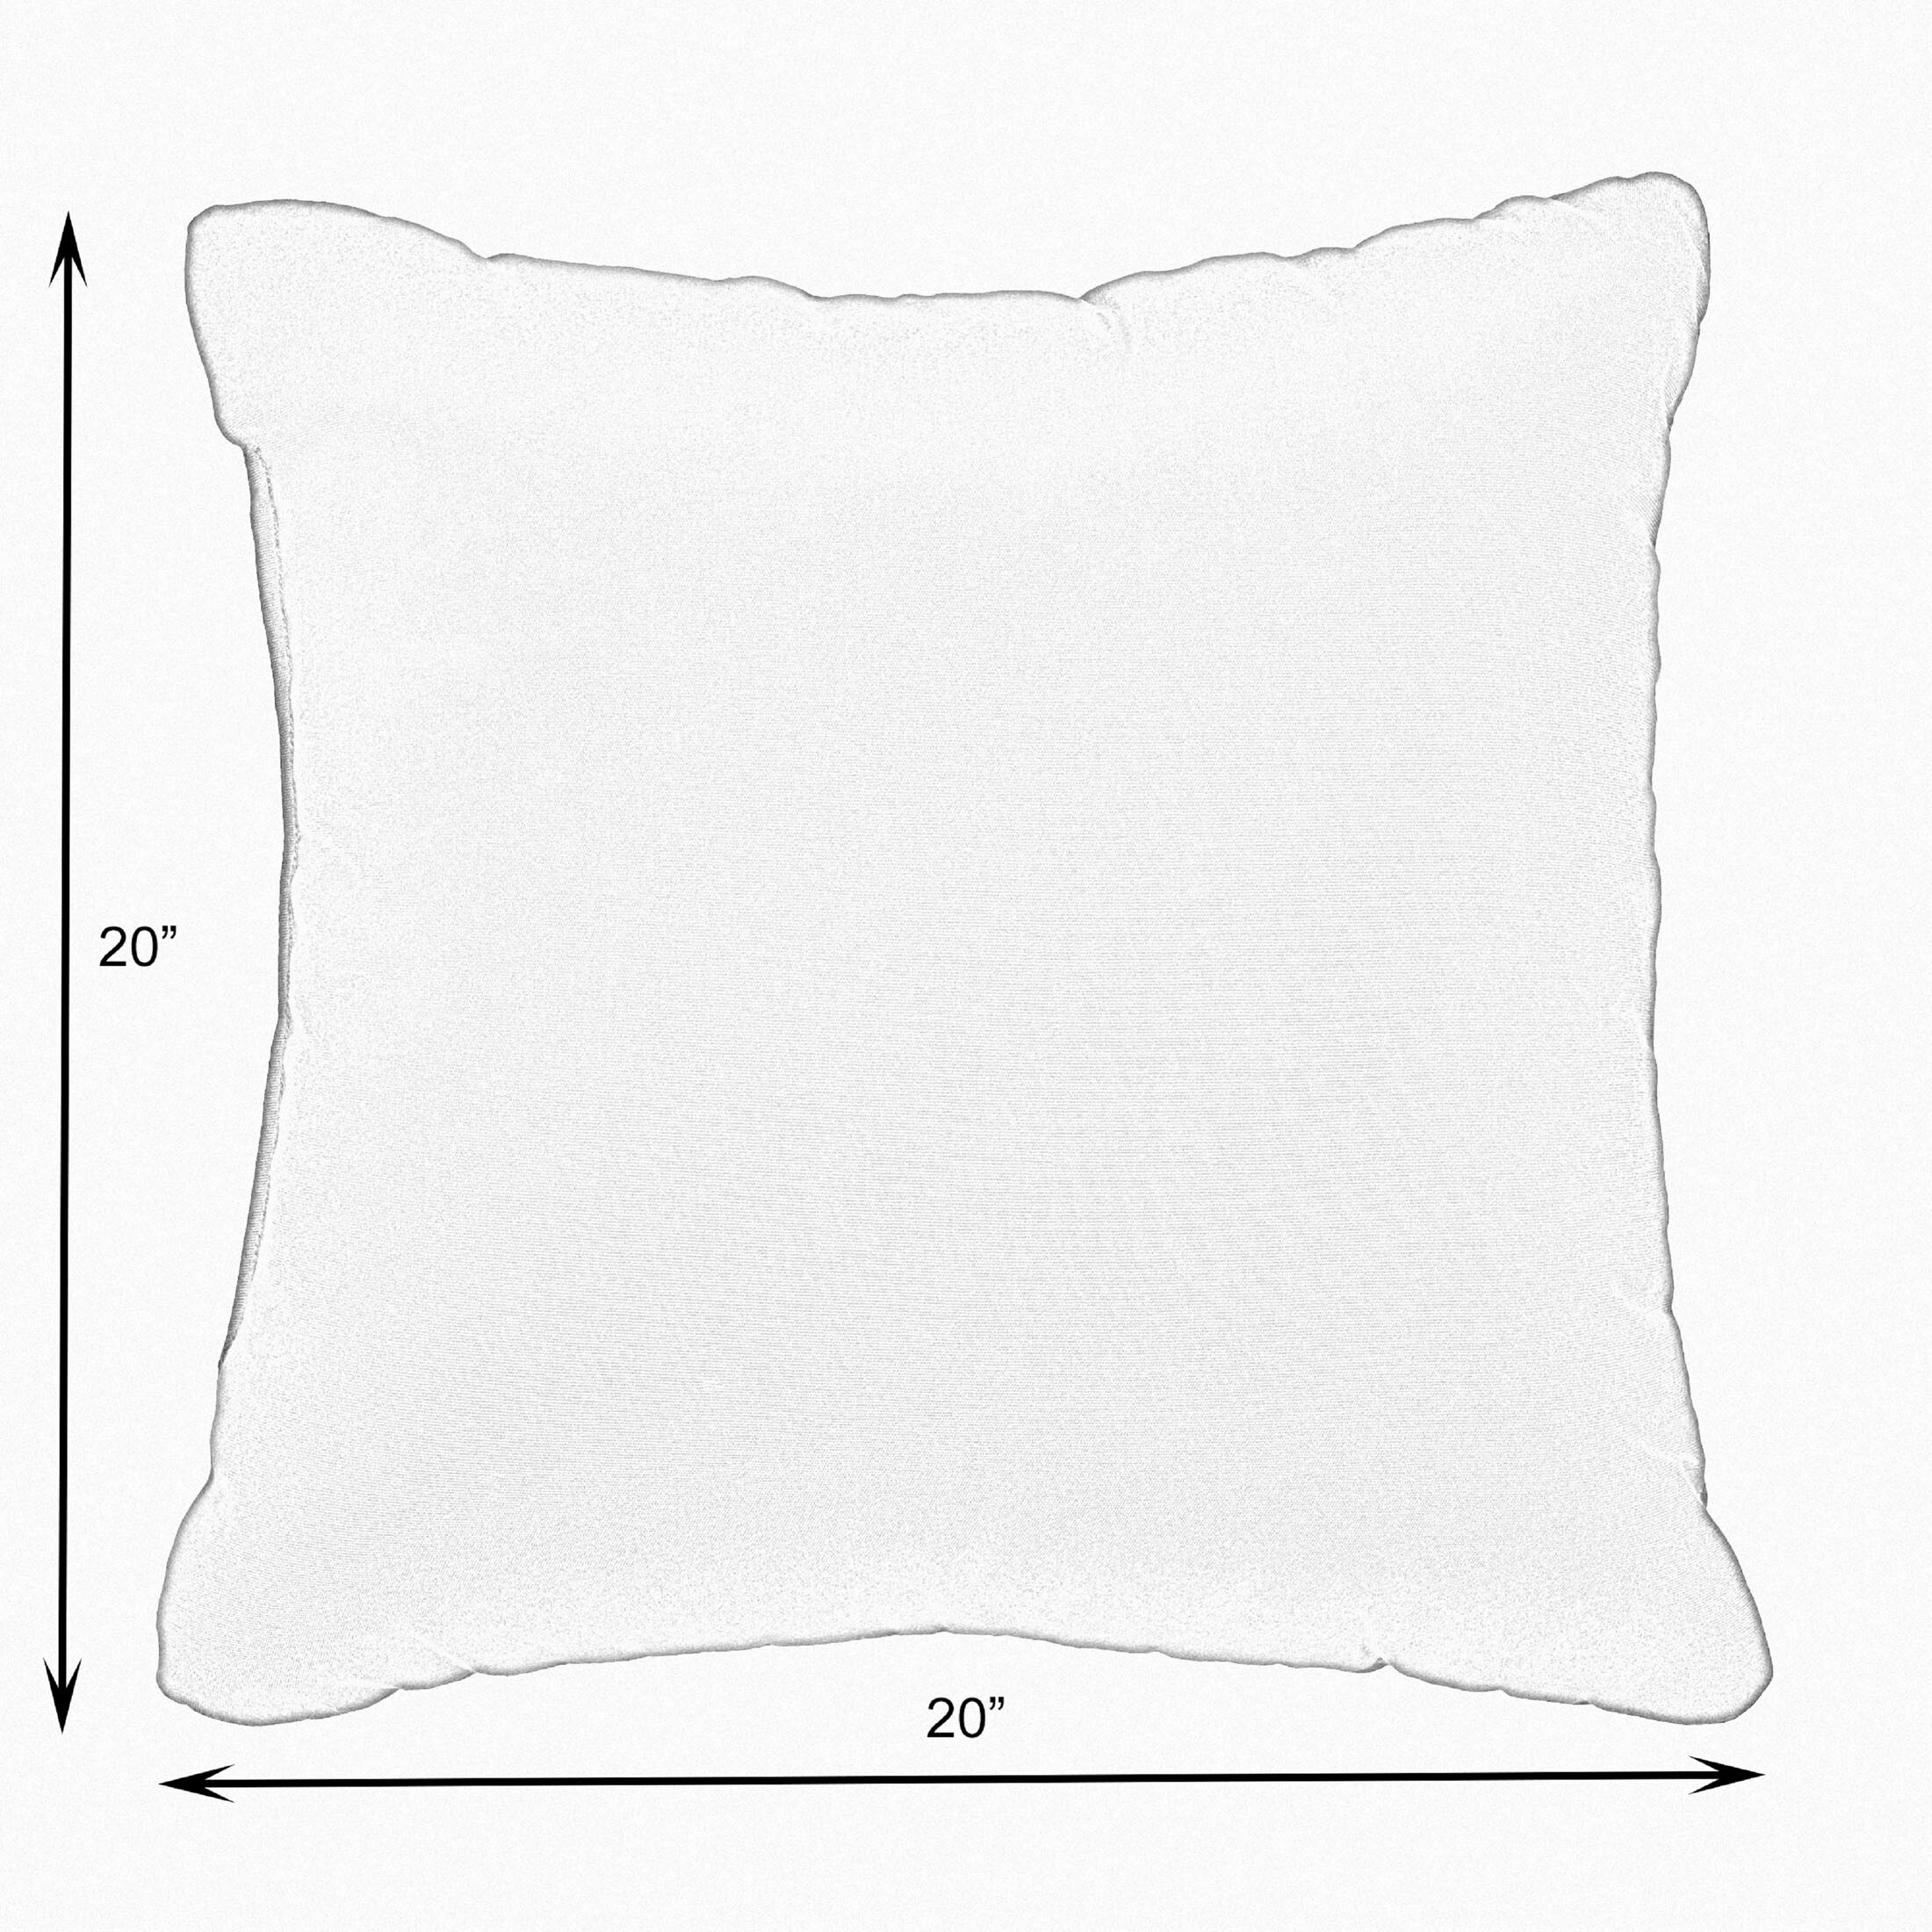 Humble + Haute Sunbrella Multi-Colored Check Indoor/Outdoor Corded Square Pillows (Set of 2)